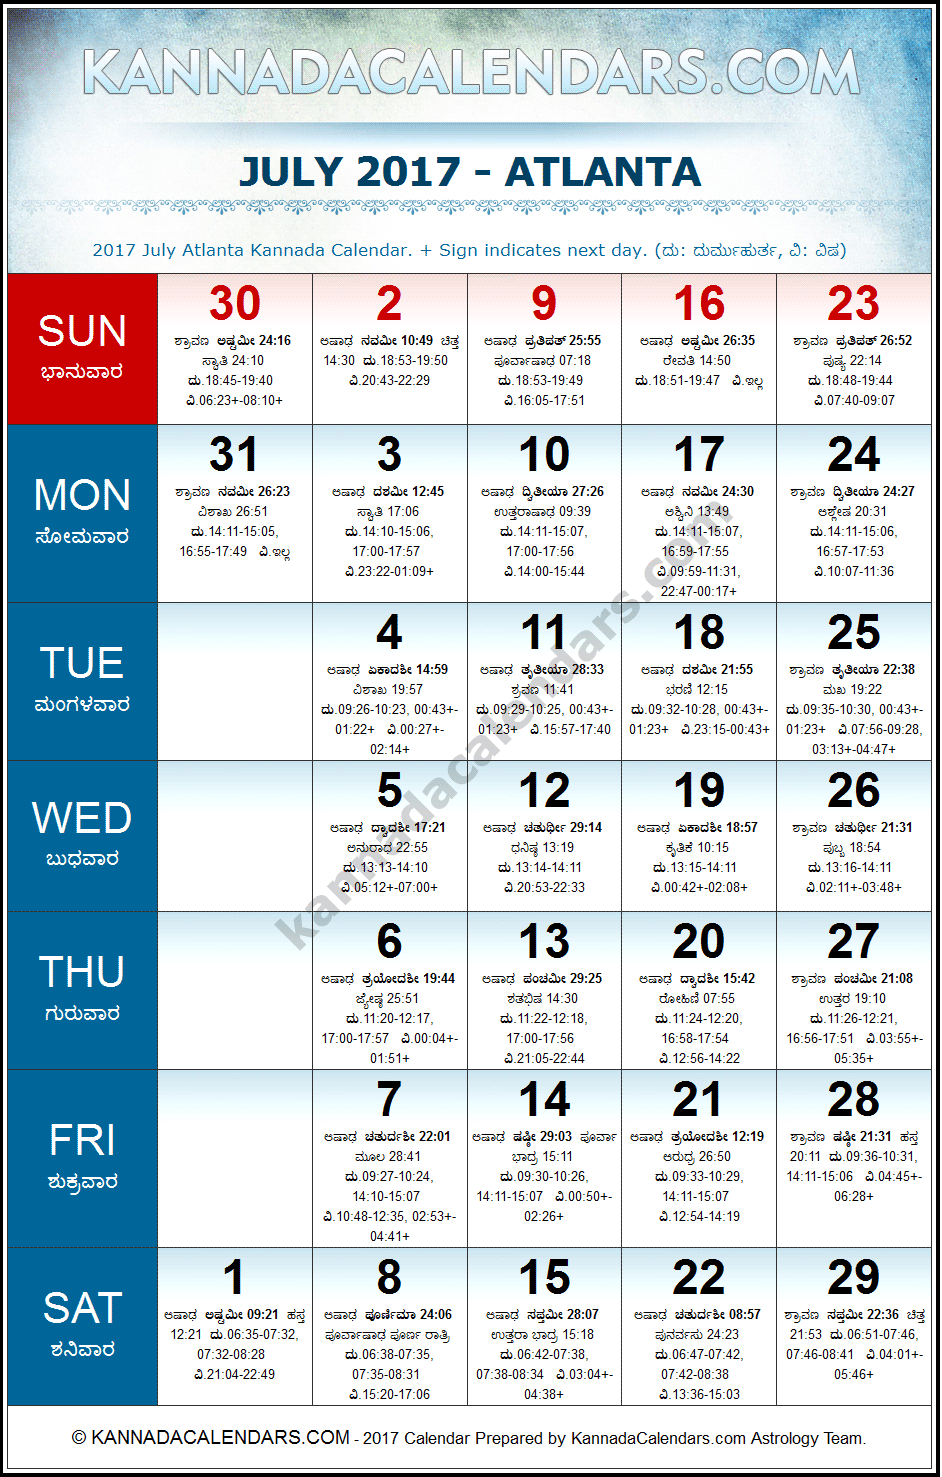 July 2017 Kannada Calendar for Atlanta, USA